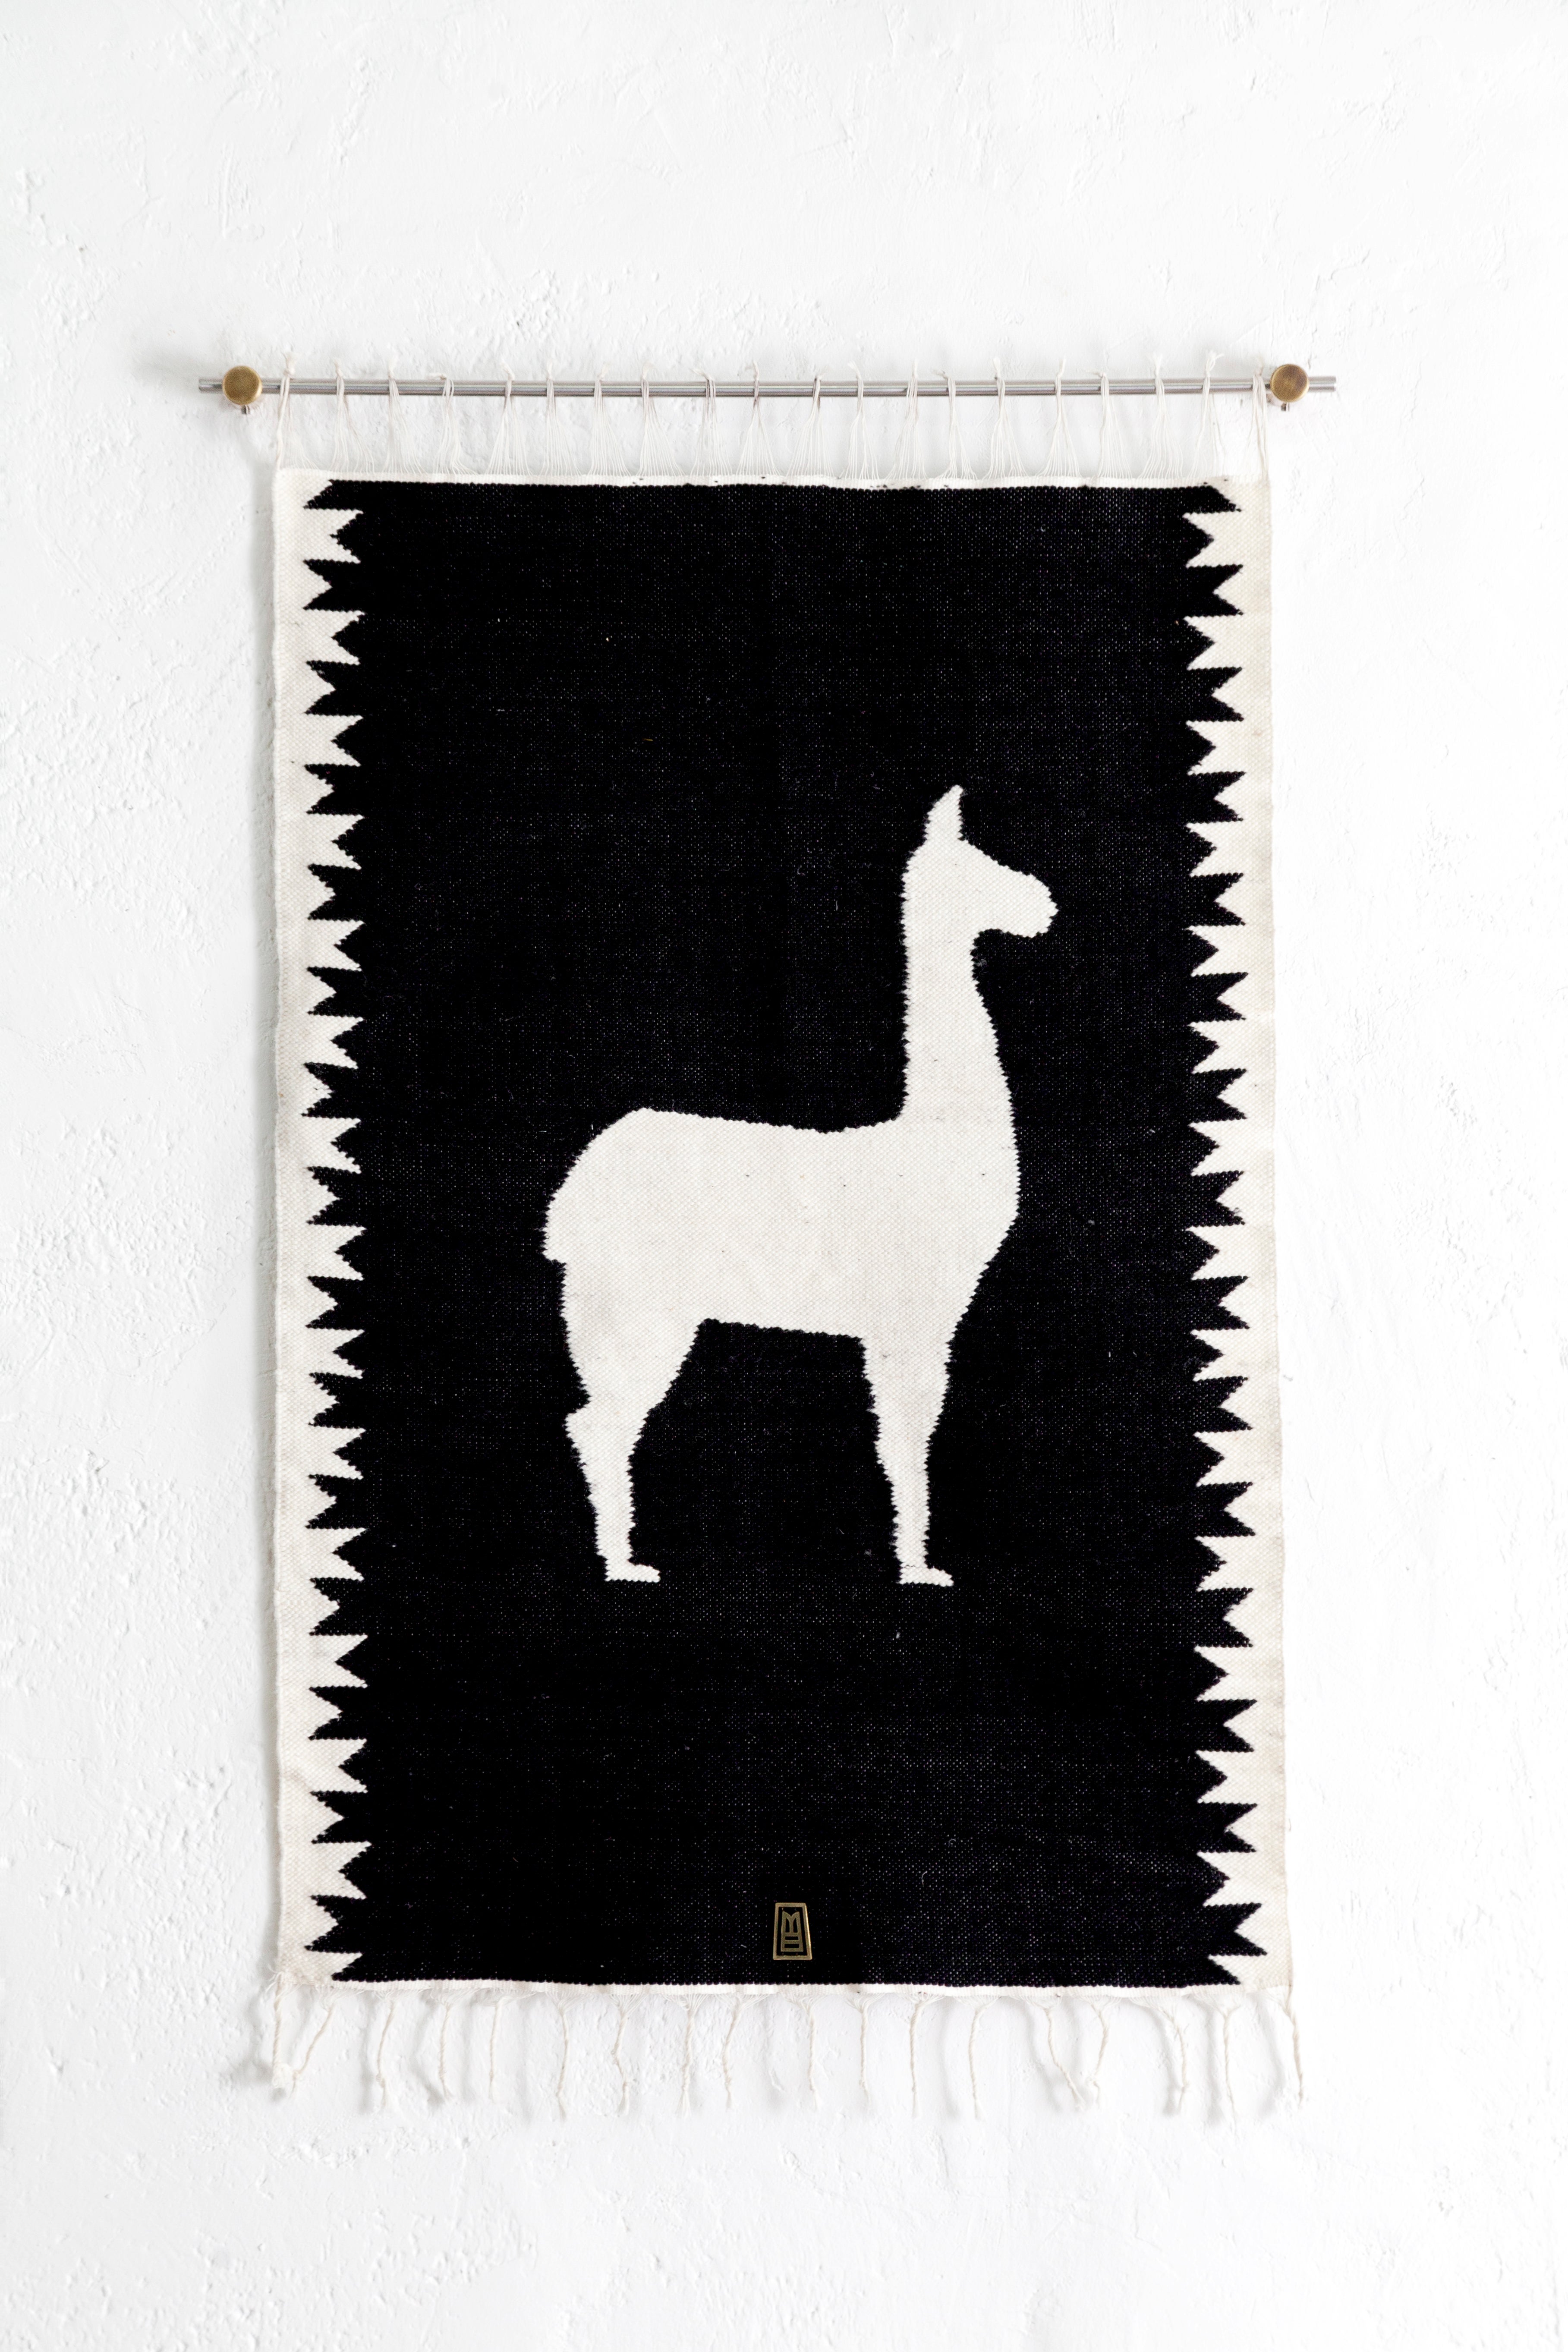 LLAMA Sheep Wool Handwoven Tapestry, Bronze w Stainless Steel Wall Mount, Black